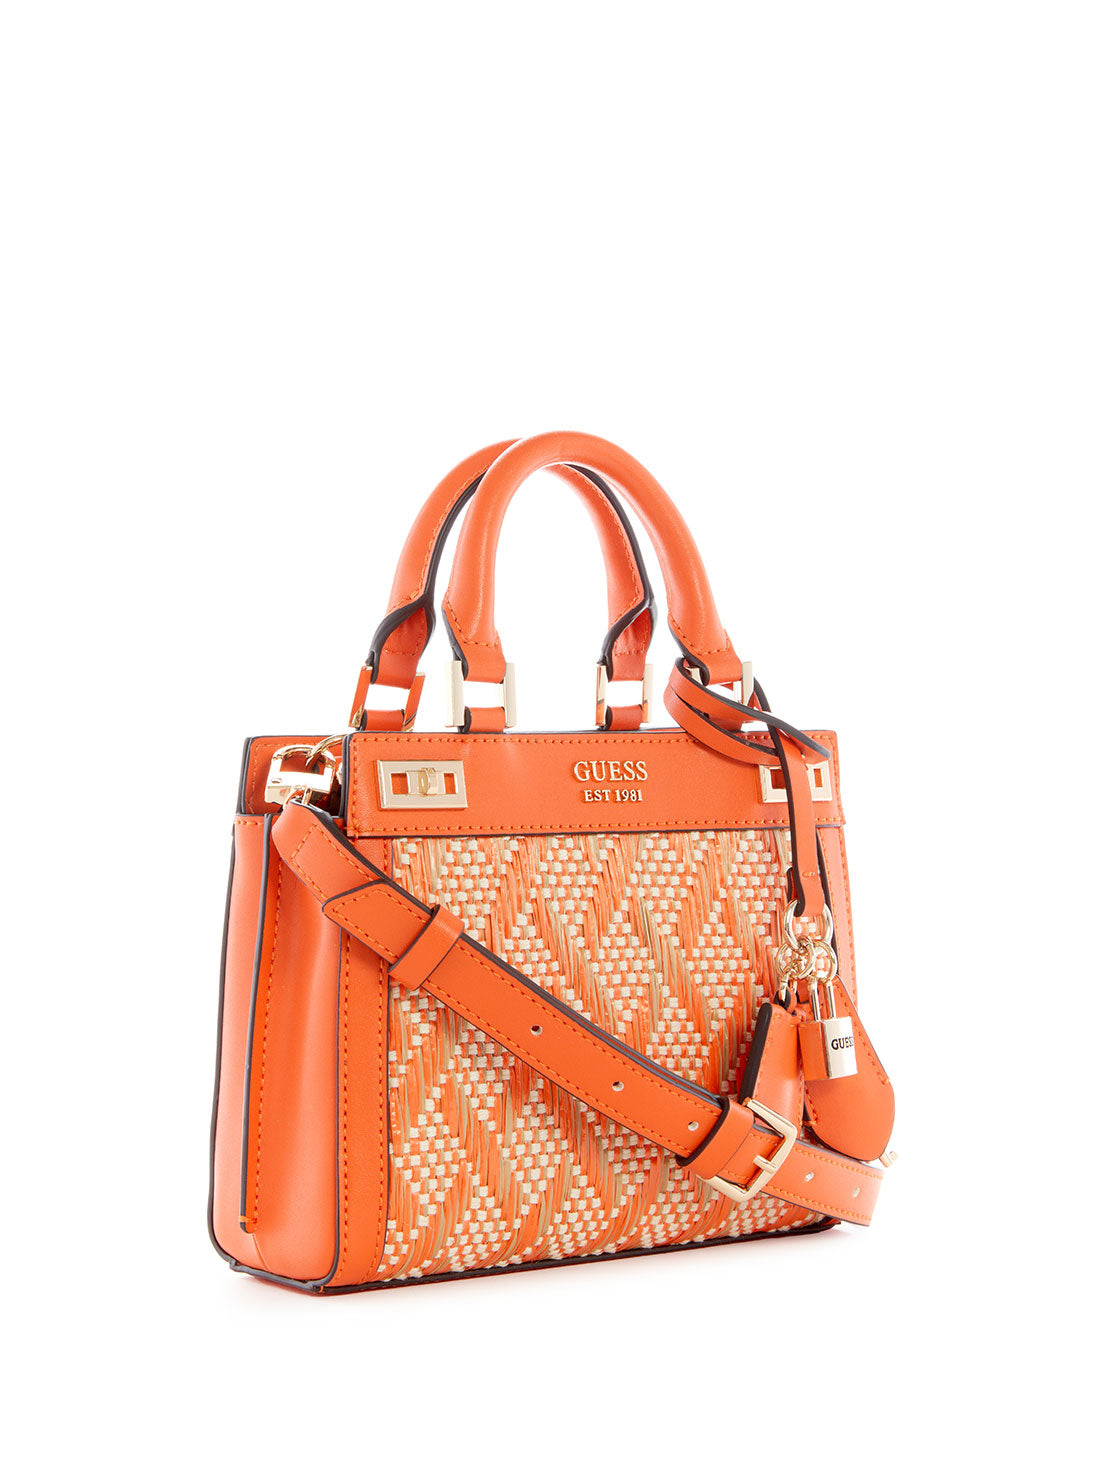 GUESS Women's Orange Katey Mini Satchel Bag WR787073 Front Side View